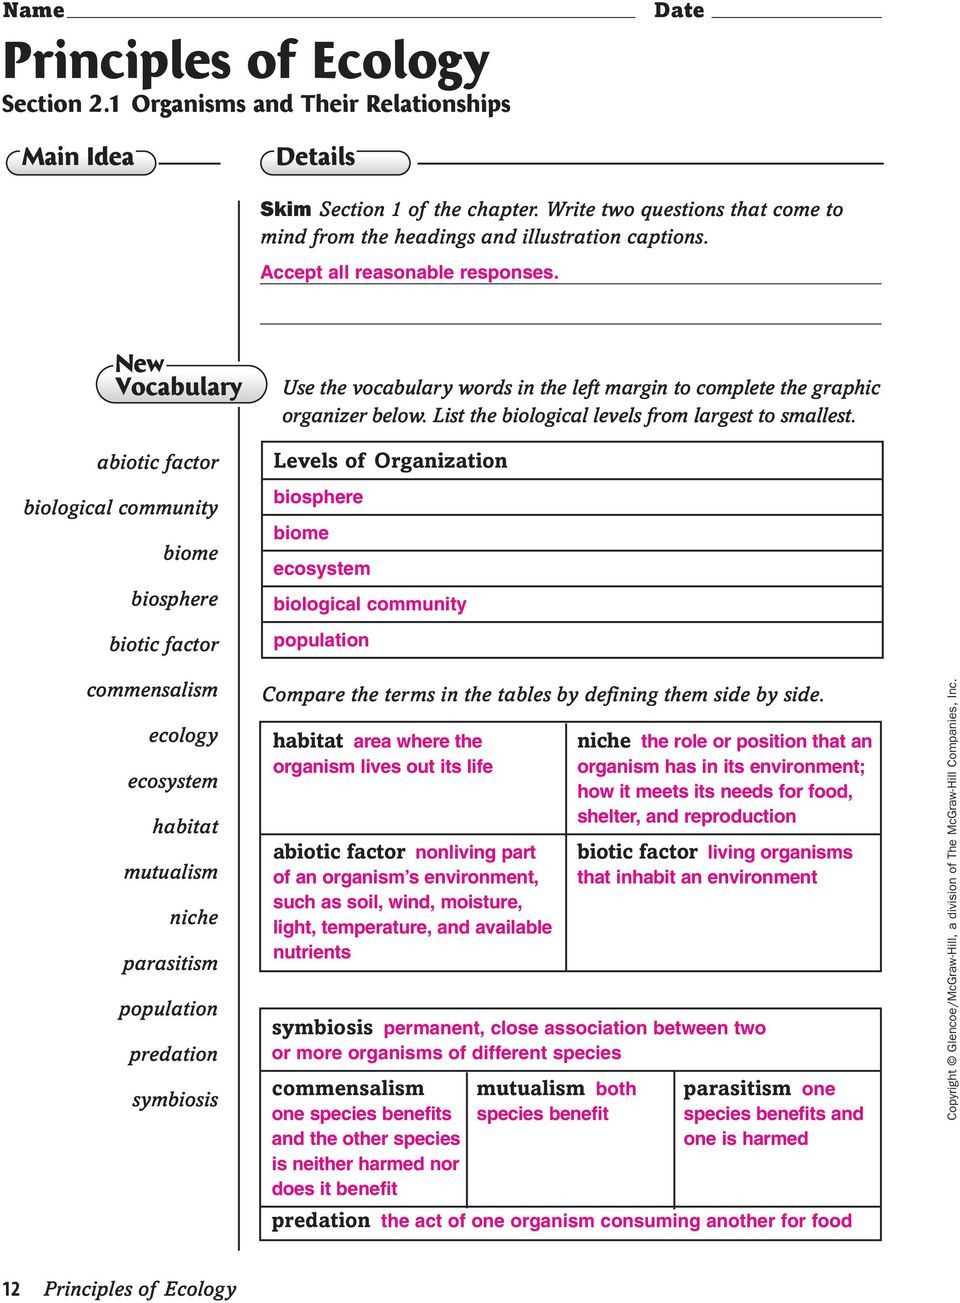 Ecology Review Worksheet 1 Ecology Worksheet Answer Key Worksheet List